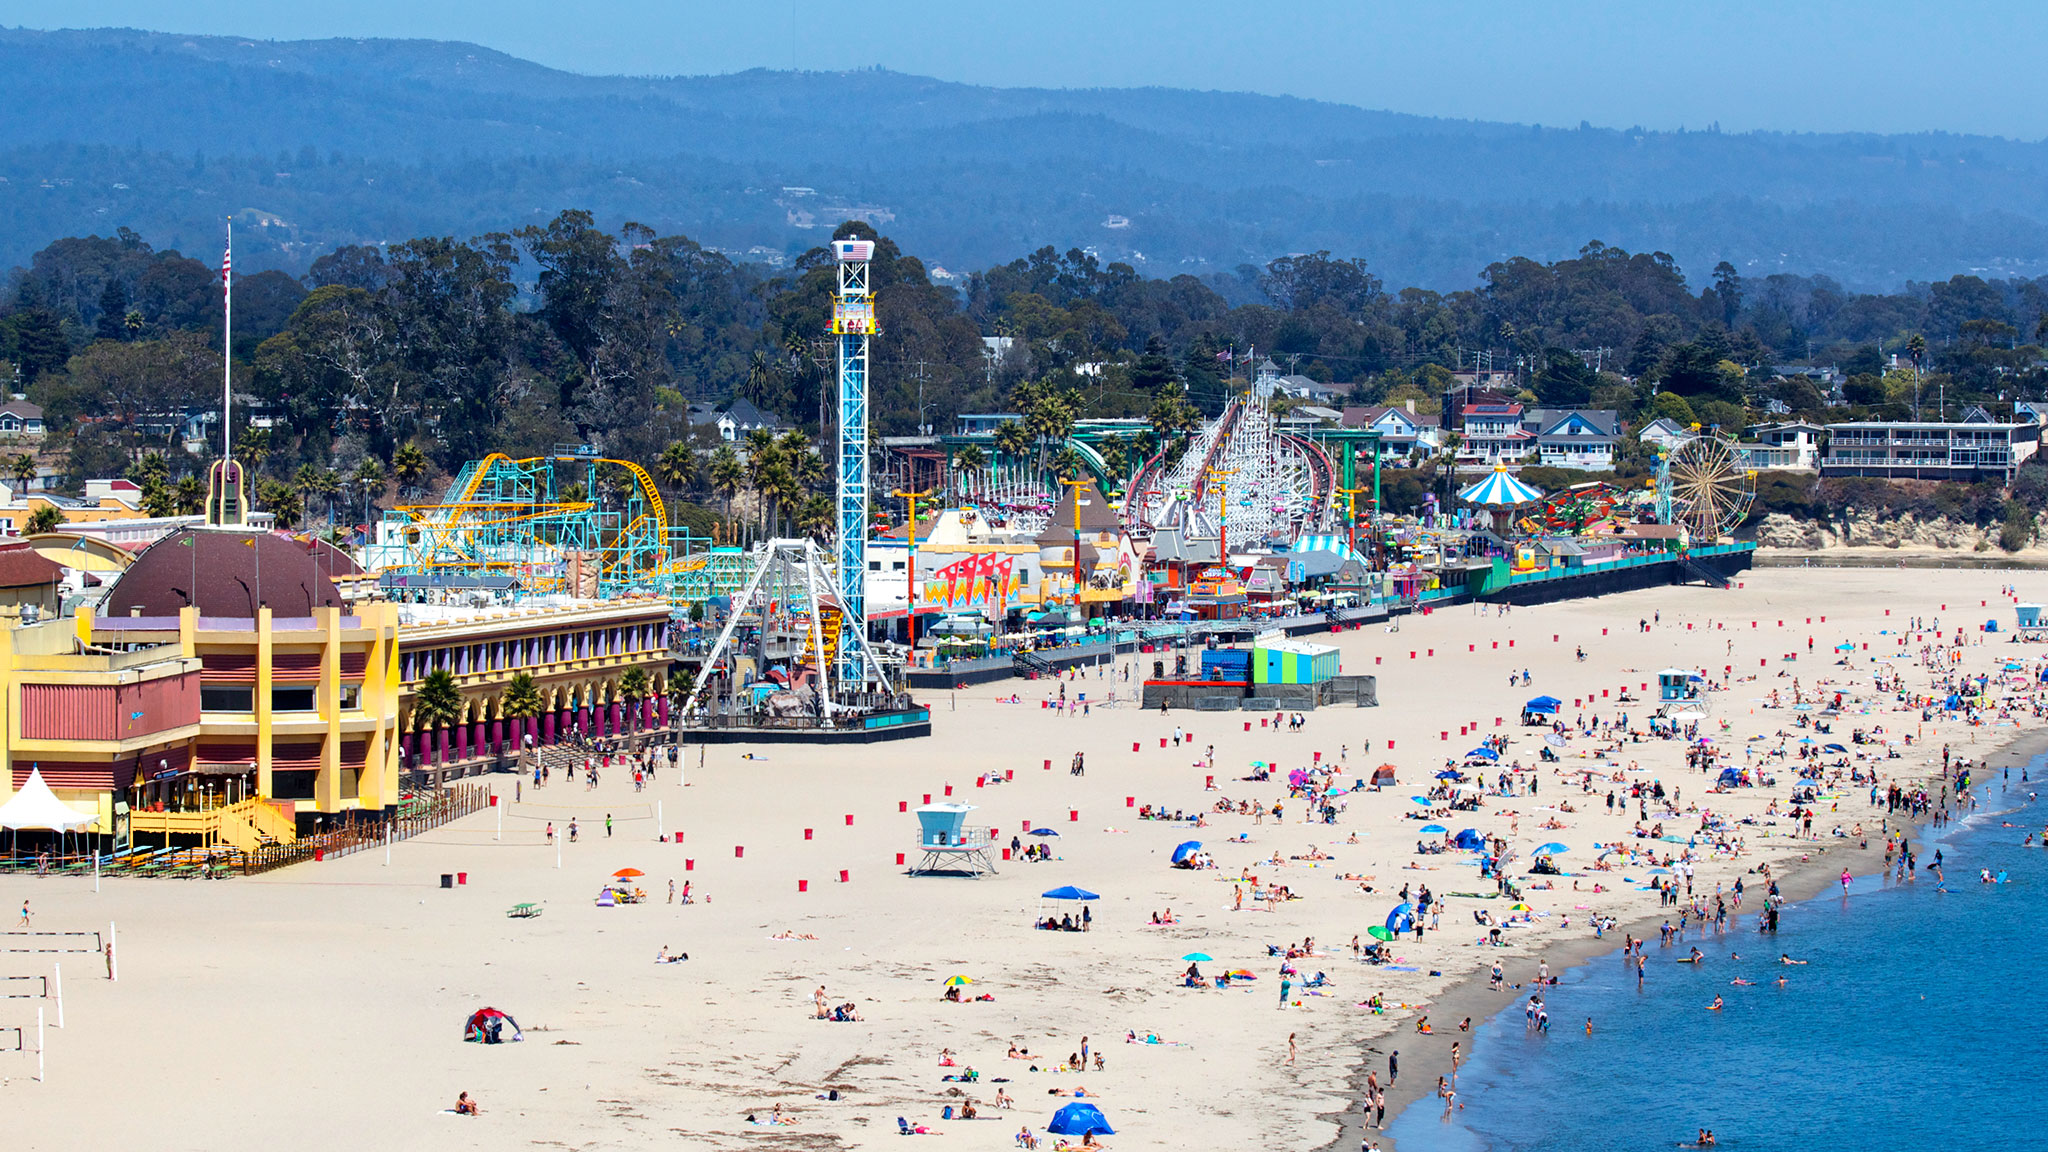 Santa Cruz Beach Boardwalk Events at the Beach!